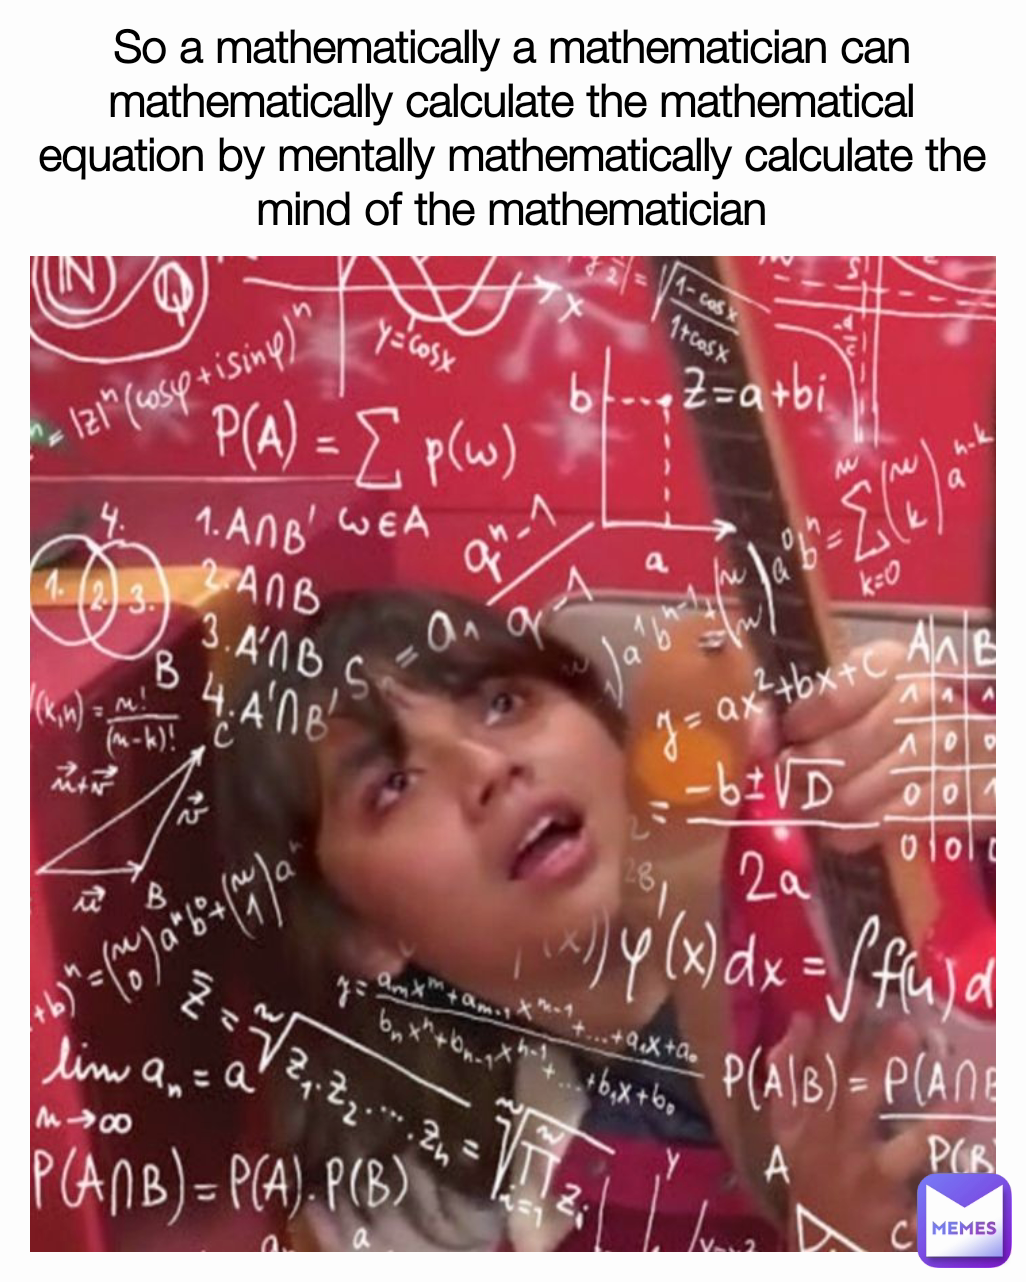 So a mathematically a mathematician can mathematically calculate the mathematical equation by mentally mathematically calculate the mind of the mathematician